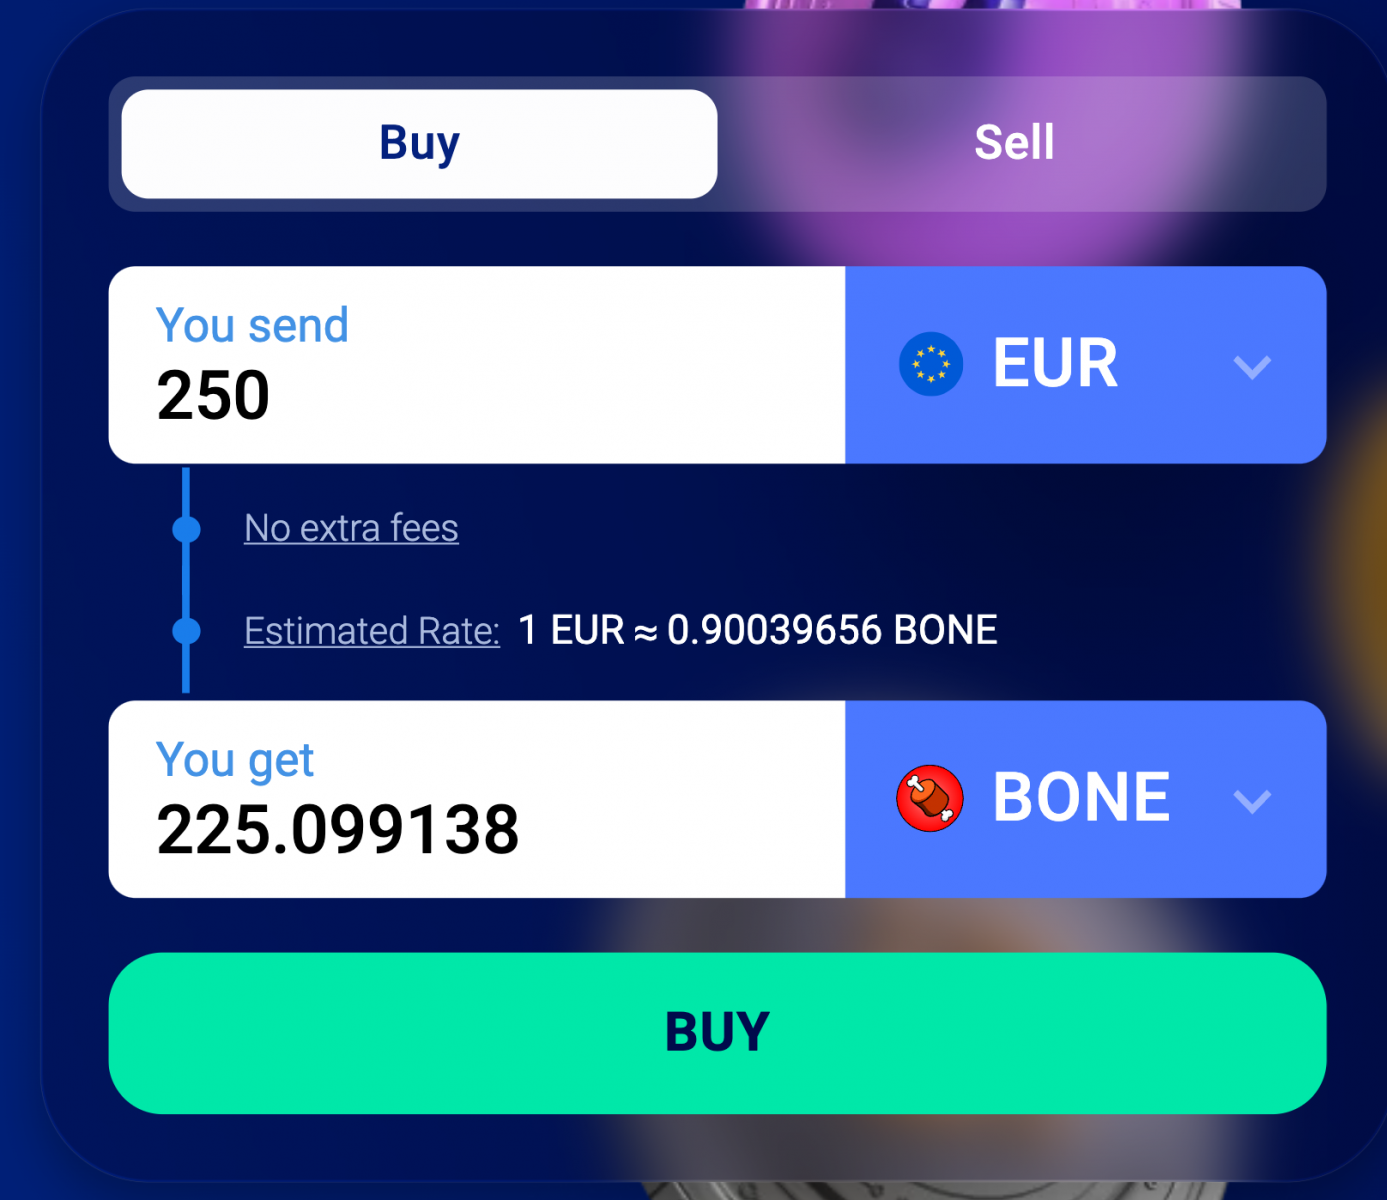 How to Buy Bone Shibaswap - BONE Explained